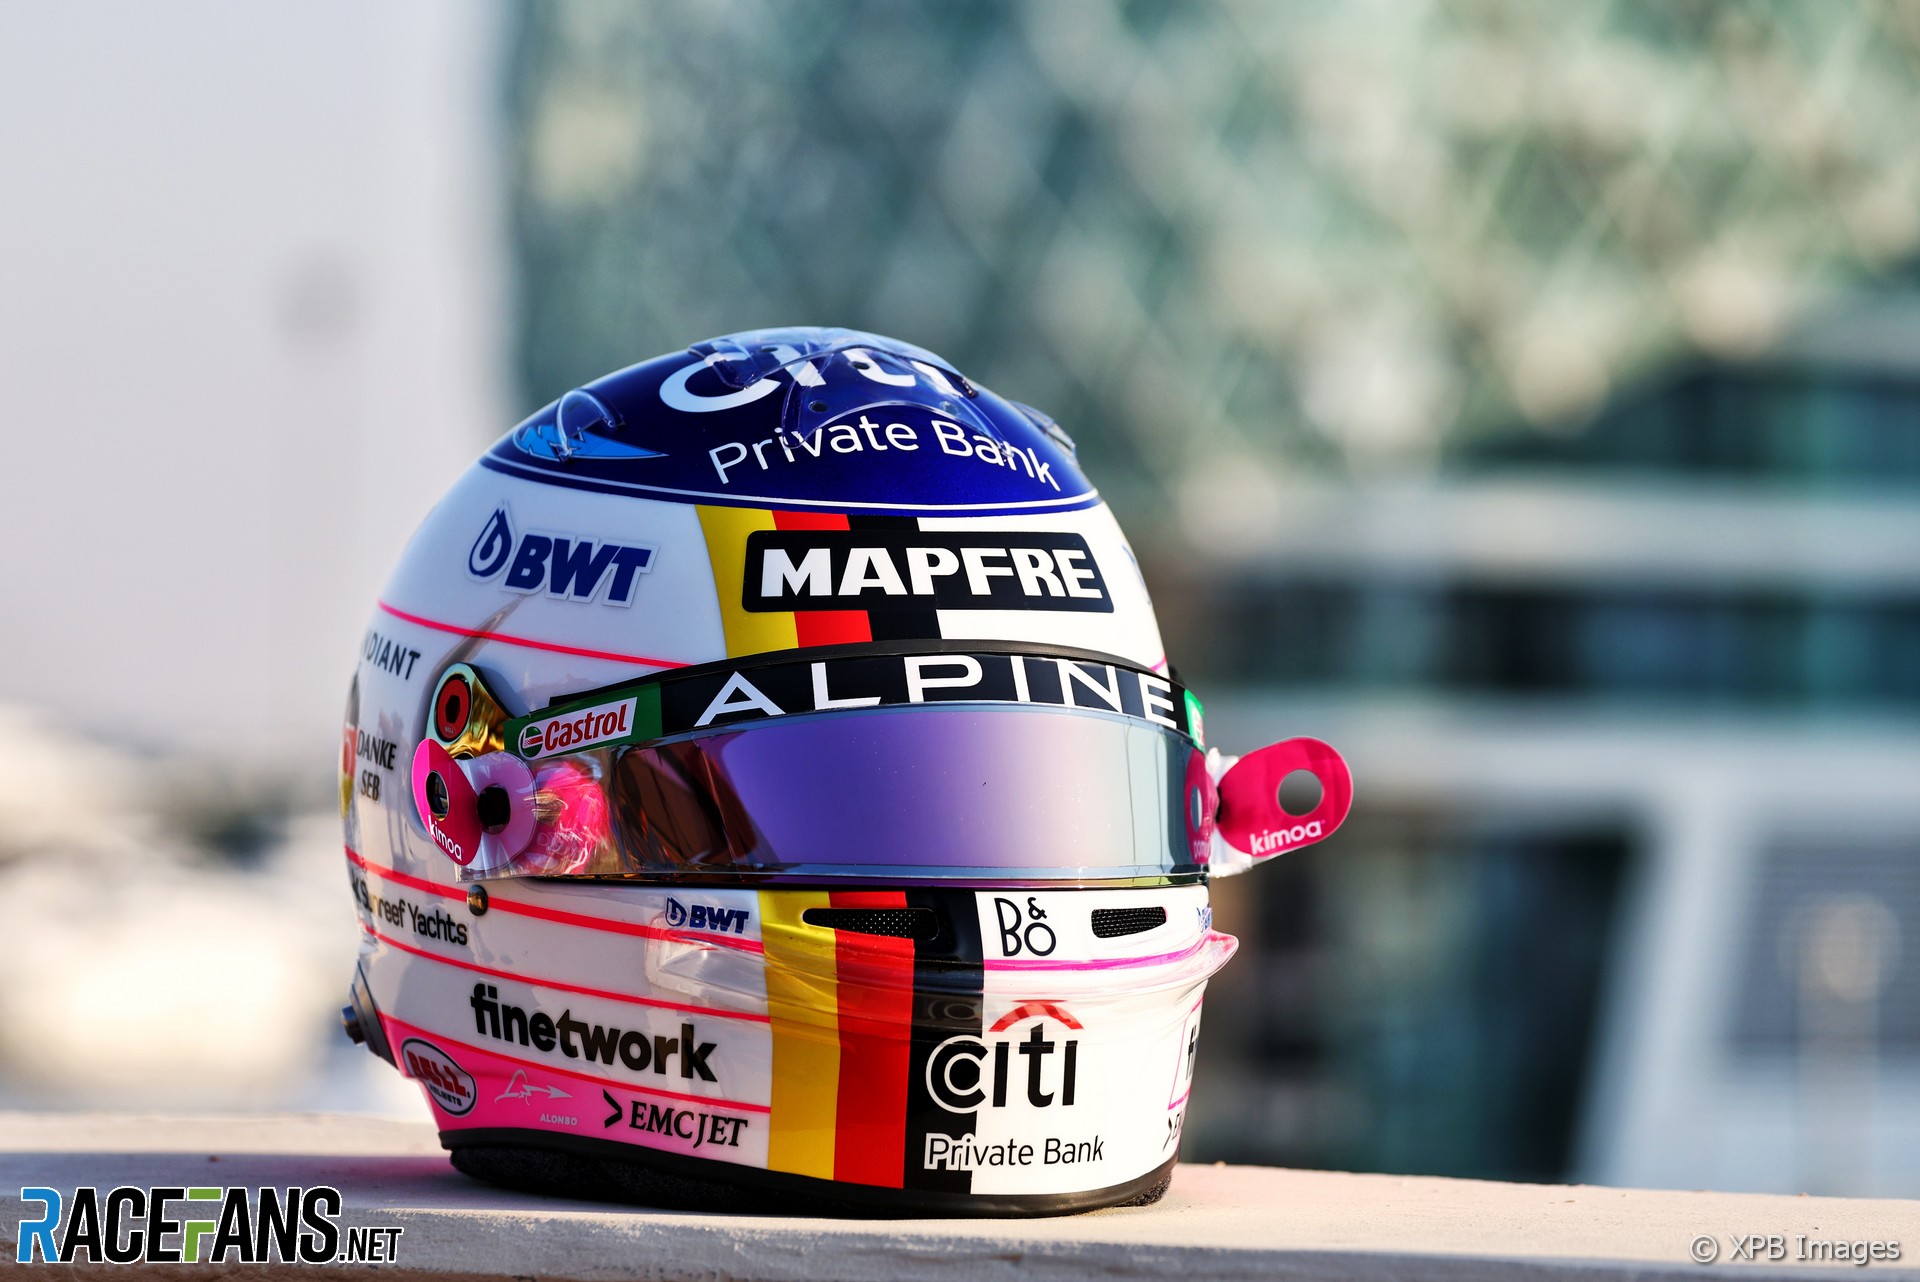 Fernando Alonso's 2022 Abu Dhabi Grand Prix helmet